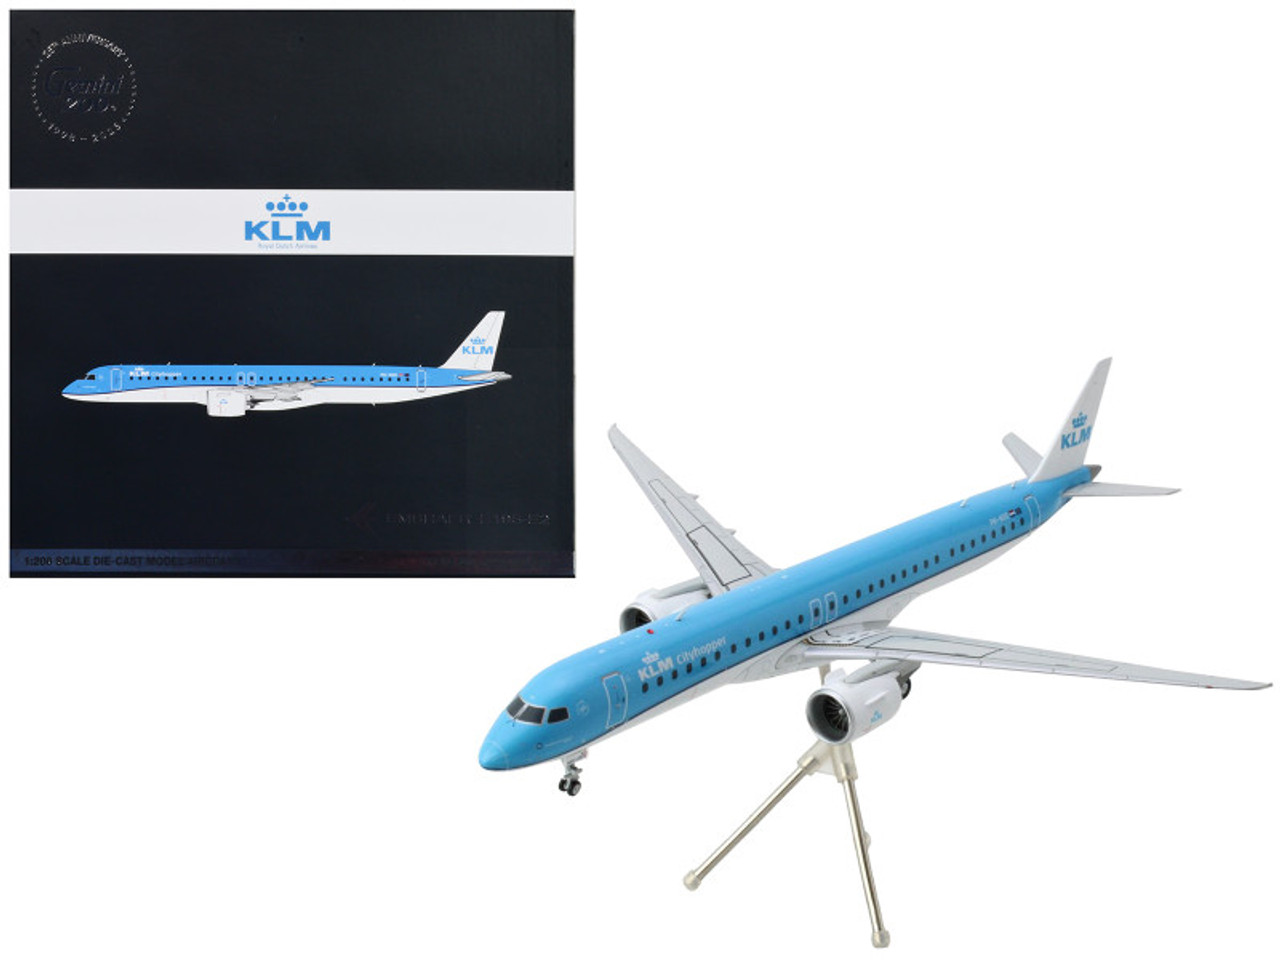 Embraer E195-E2 Commercial Aircraft "KLM Cityhopper" Blue and White "Gemini 200" Series 1/200 Diecast Model Airplane by GeminiJets